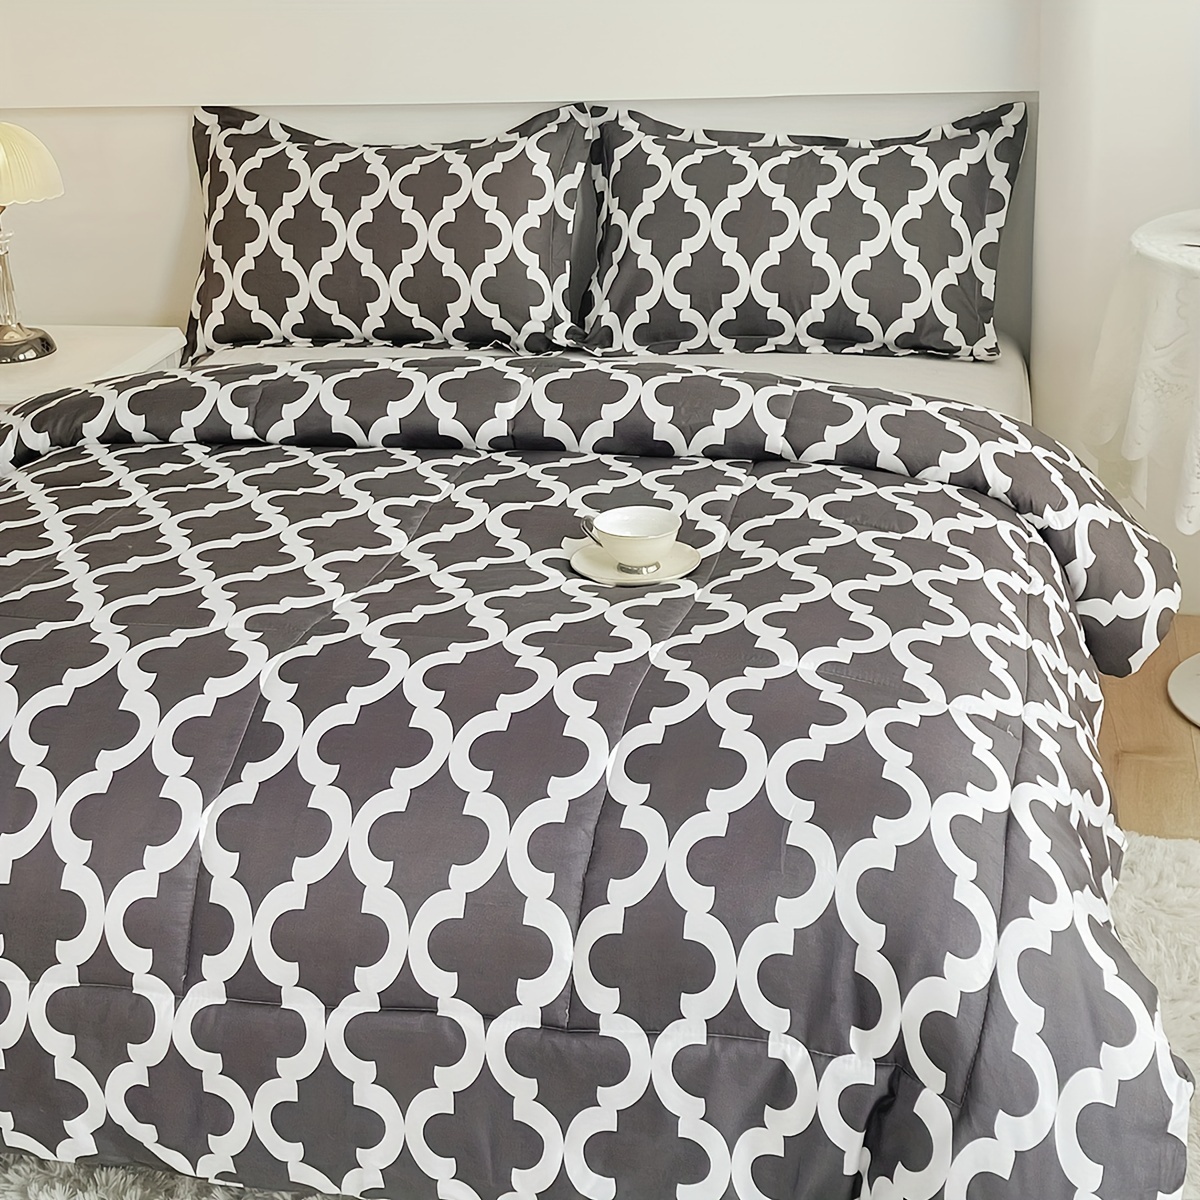 Skull And Yellow Rose Louis Vuitton Bedding Sets Bed Sets, Bedroom Sets, Comforter  Sets, Duvet Cover